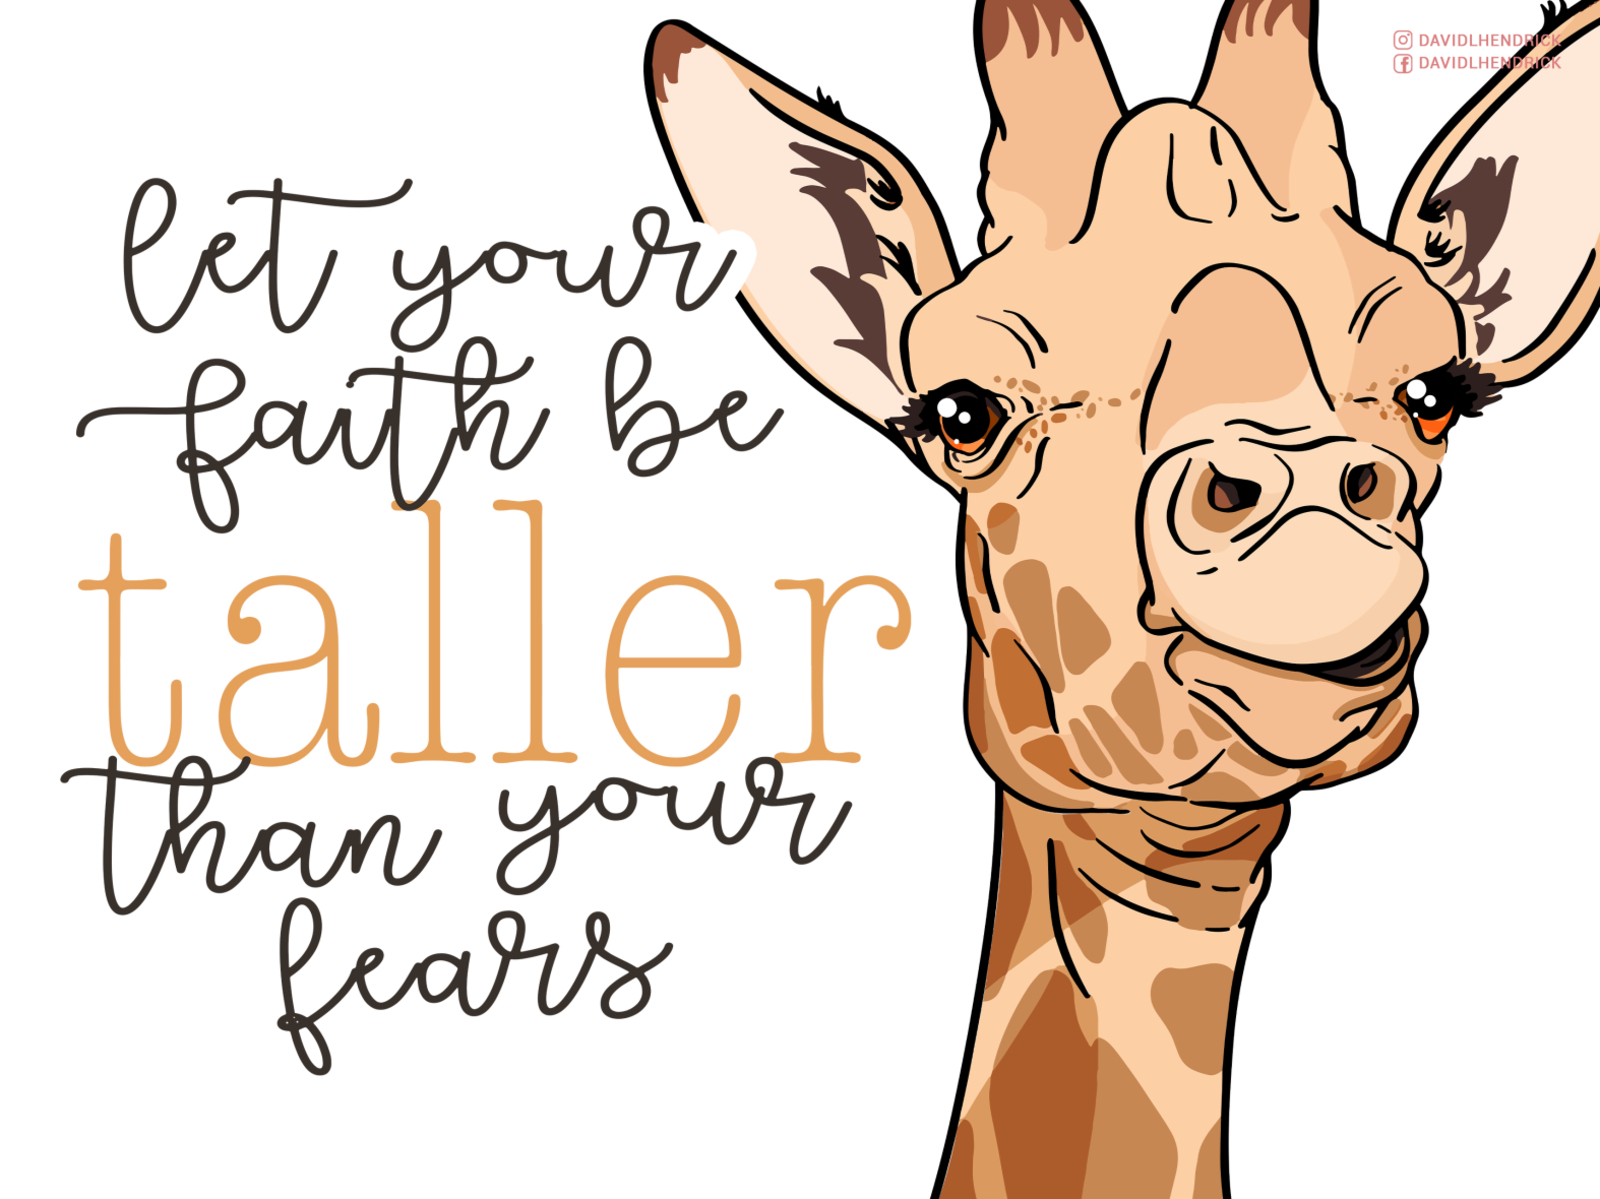 giraffe encouragement